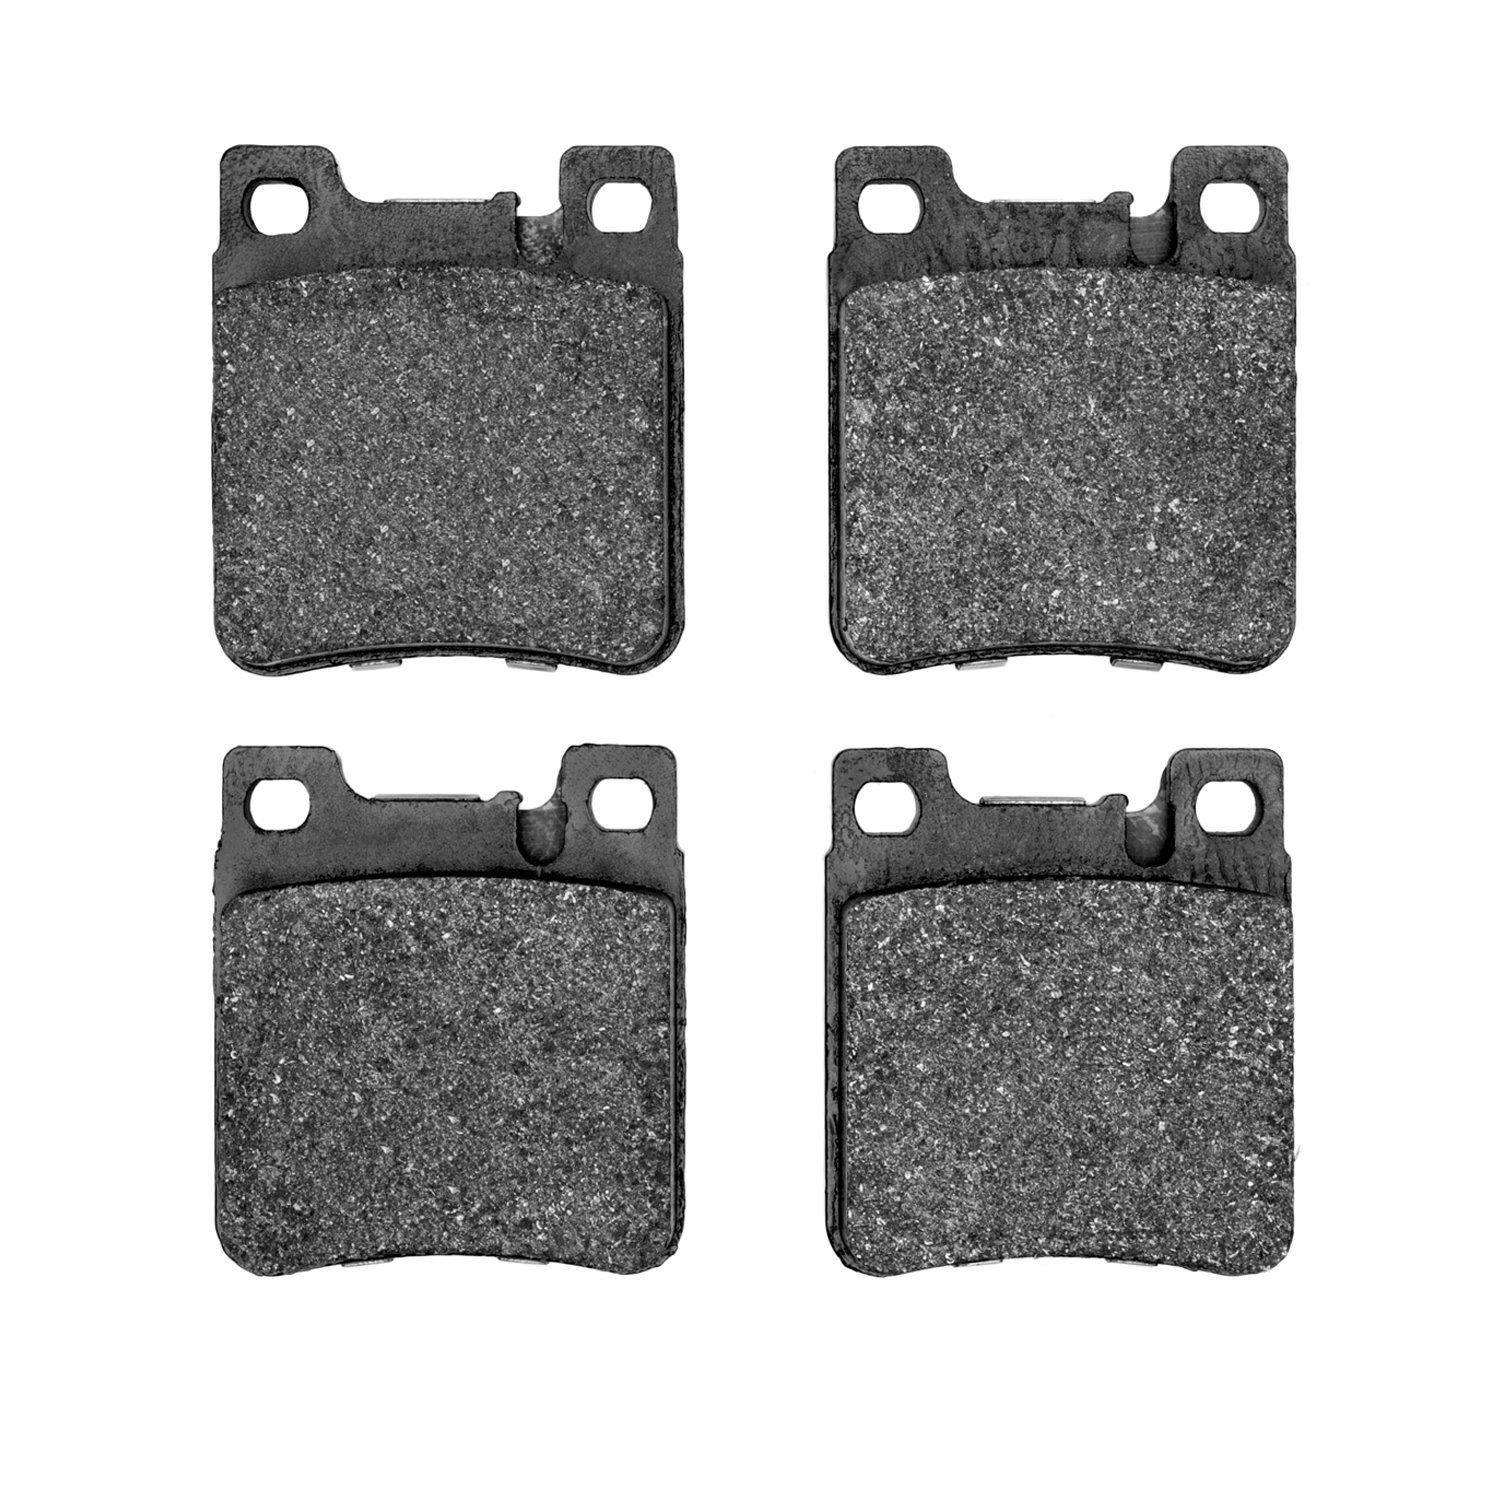 1310-0603-00 3000-Series Ceramic Brake Pads, 1991-2009 Multiple Makes/Models, Position: Rear